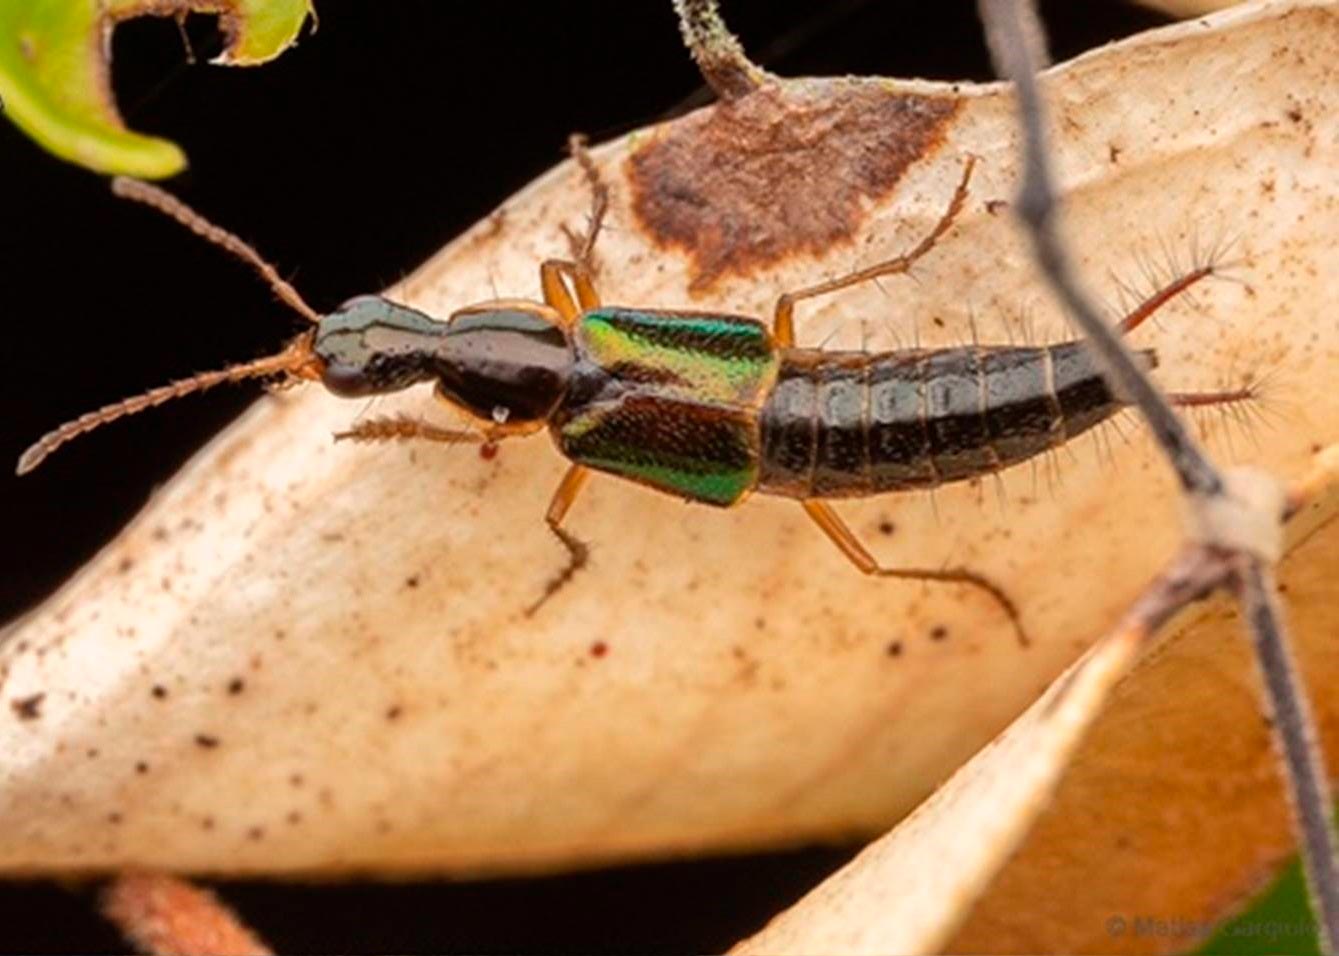 Beetle With Bottle-Opener Genitalia Discovered